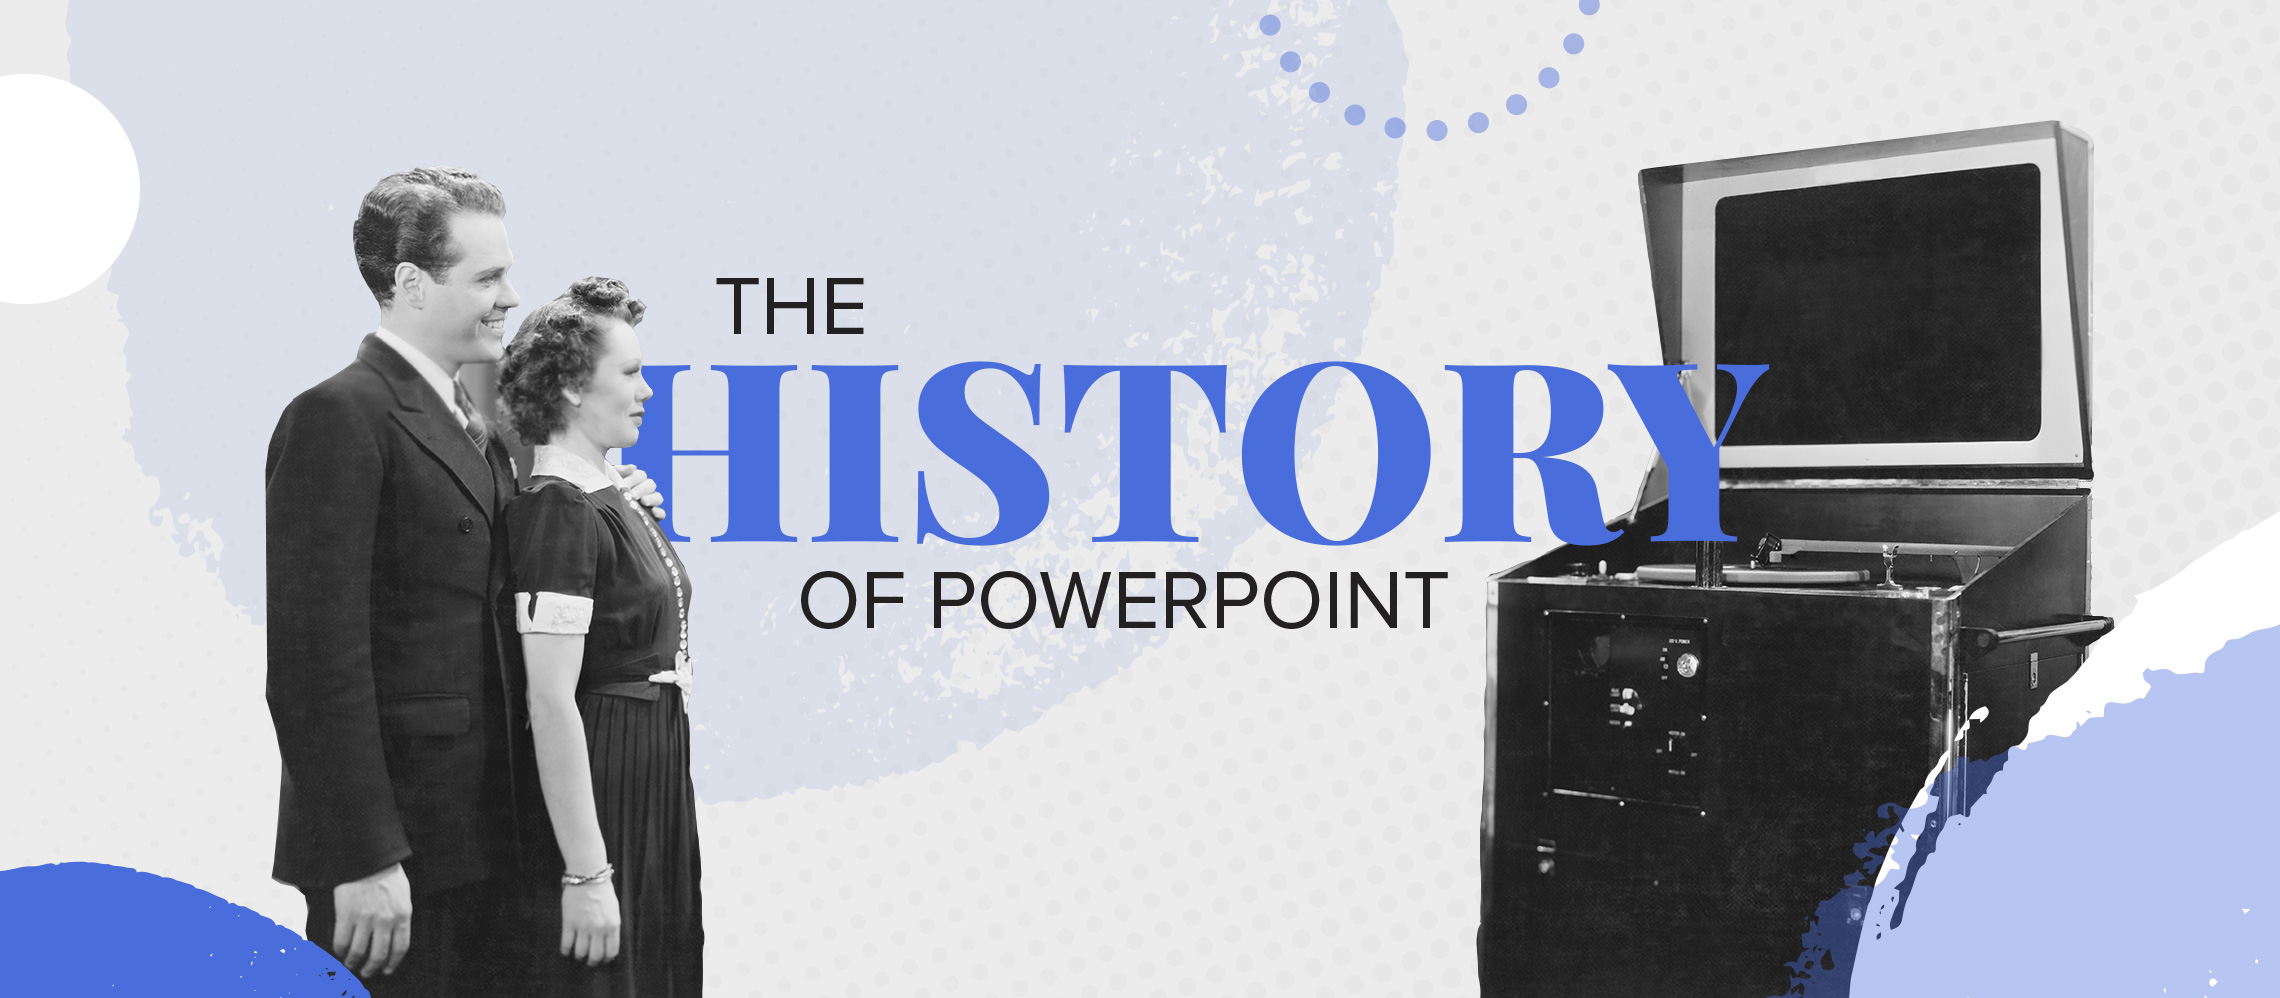 history of microsoft powerpoint presentation